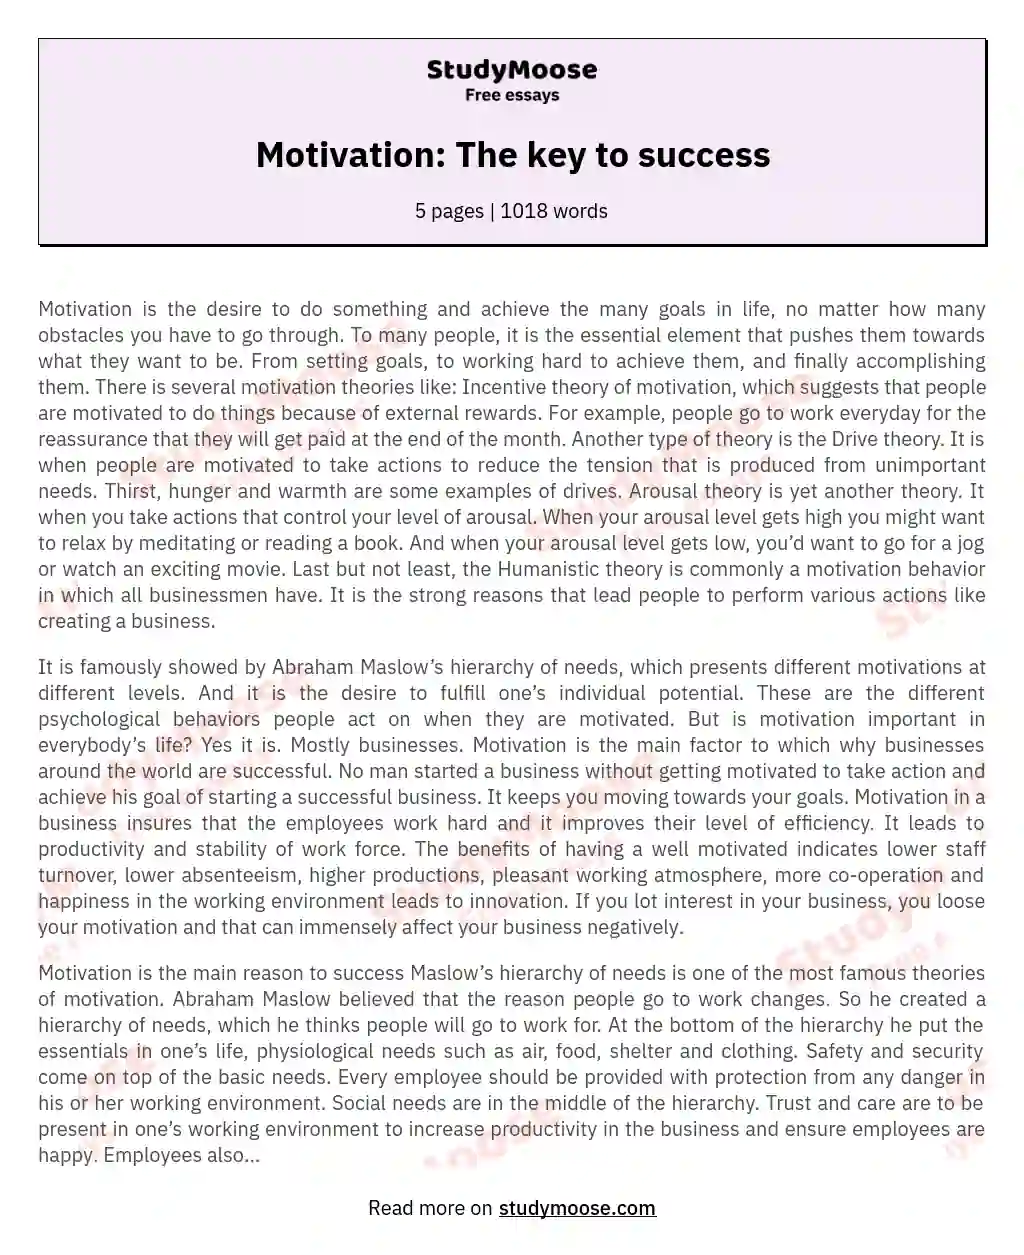 Motivation: The key to success essay